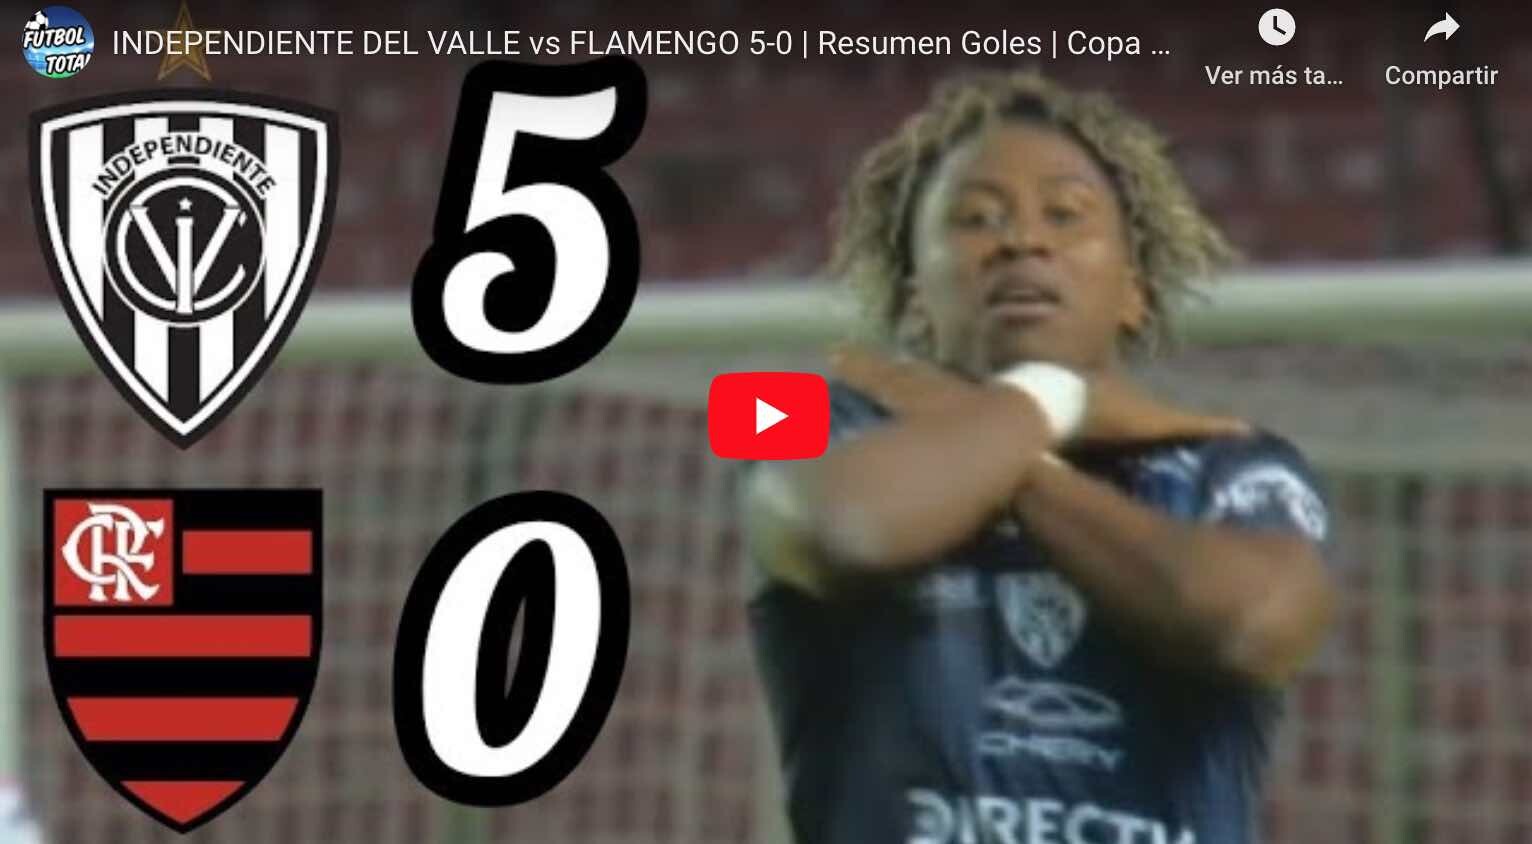 VIDEO: GOLES INDEPENDIENTE DEL VALLE vs FLAMENGO 5-0